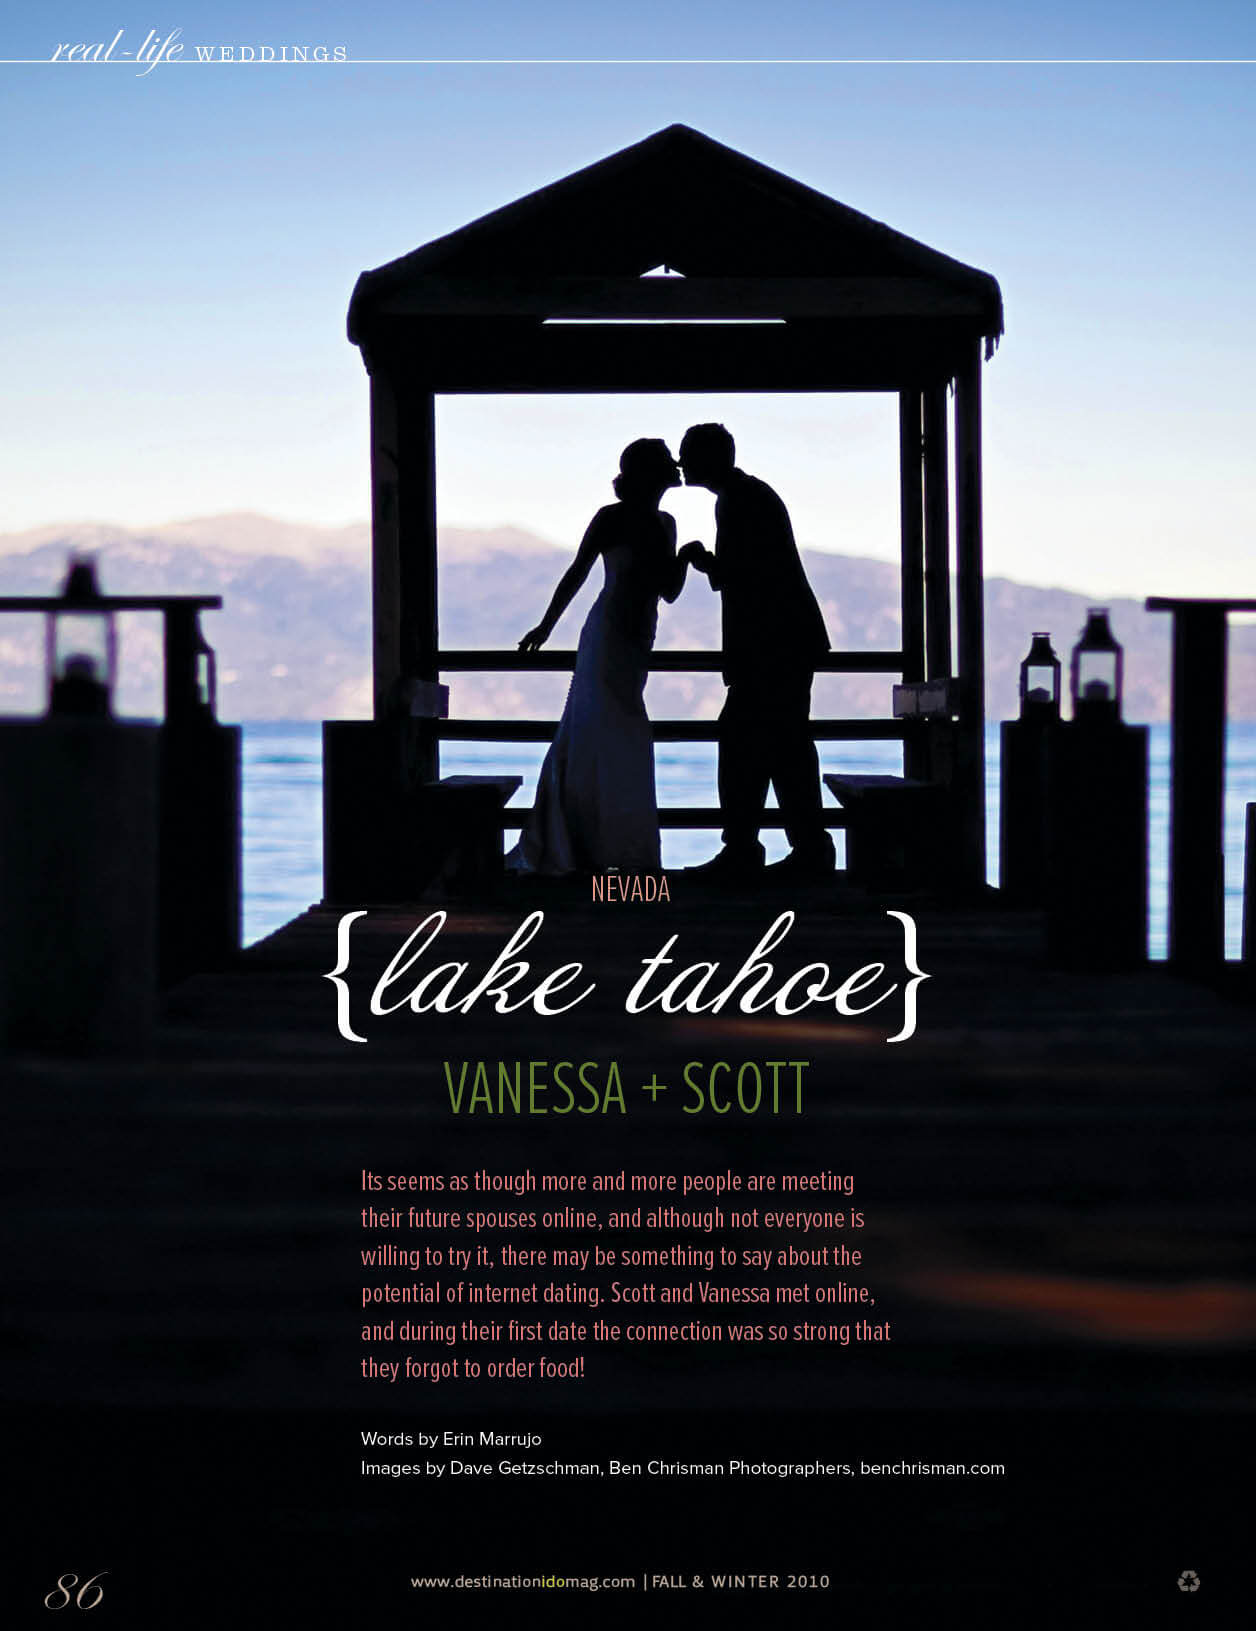 Destination I Do Magazine, Merrily Wed Lake Tahoe Weddings, Private Lake Tahoe lakefront estate wedding